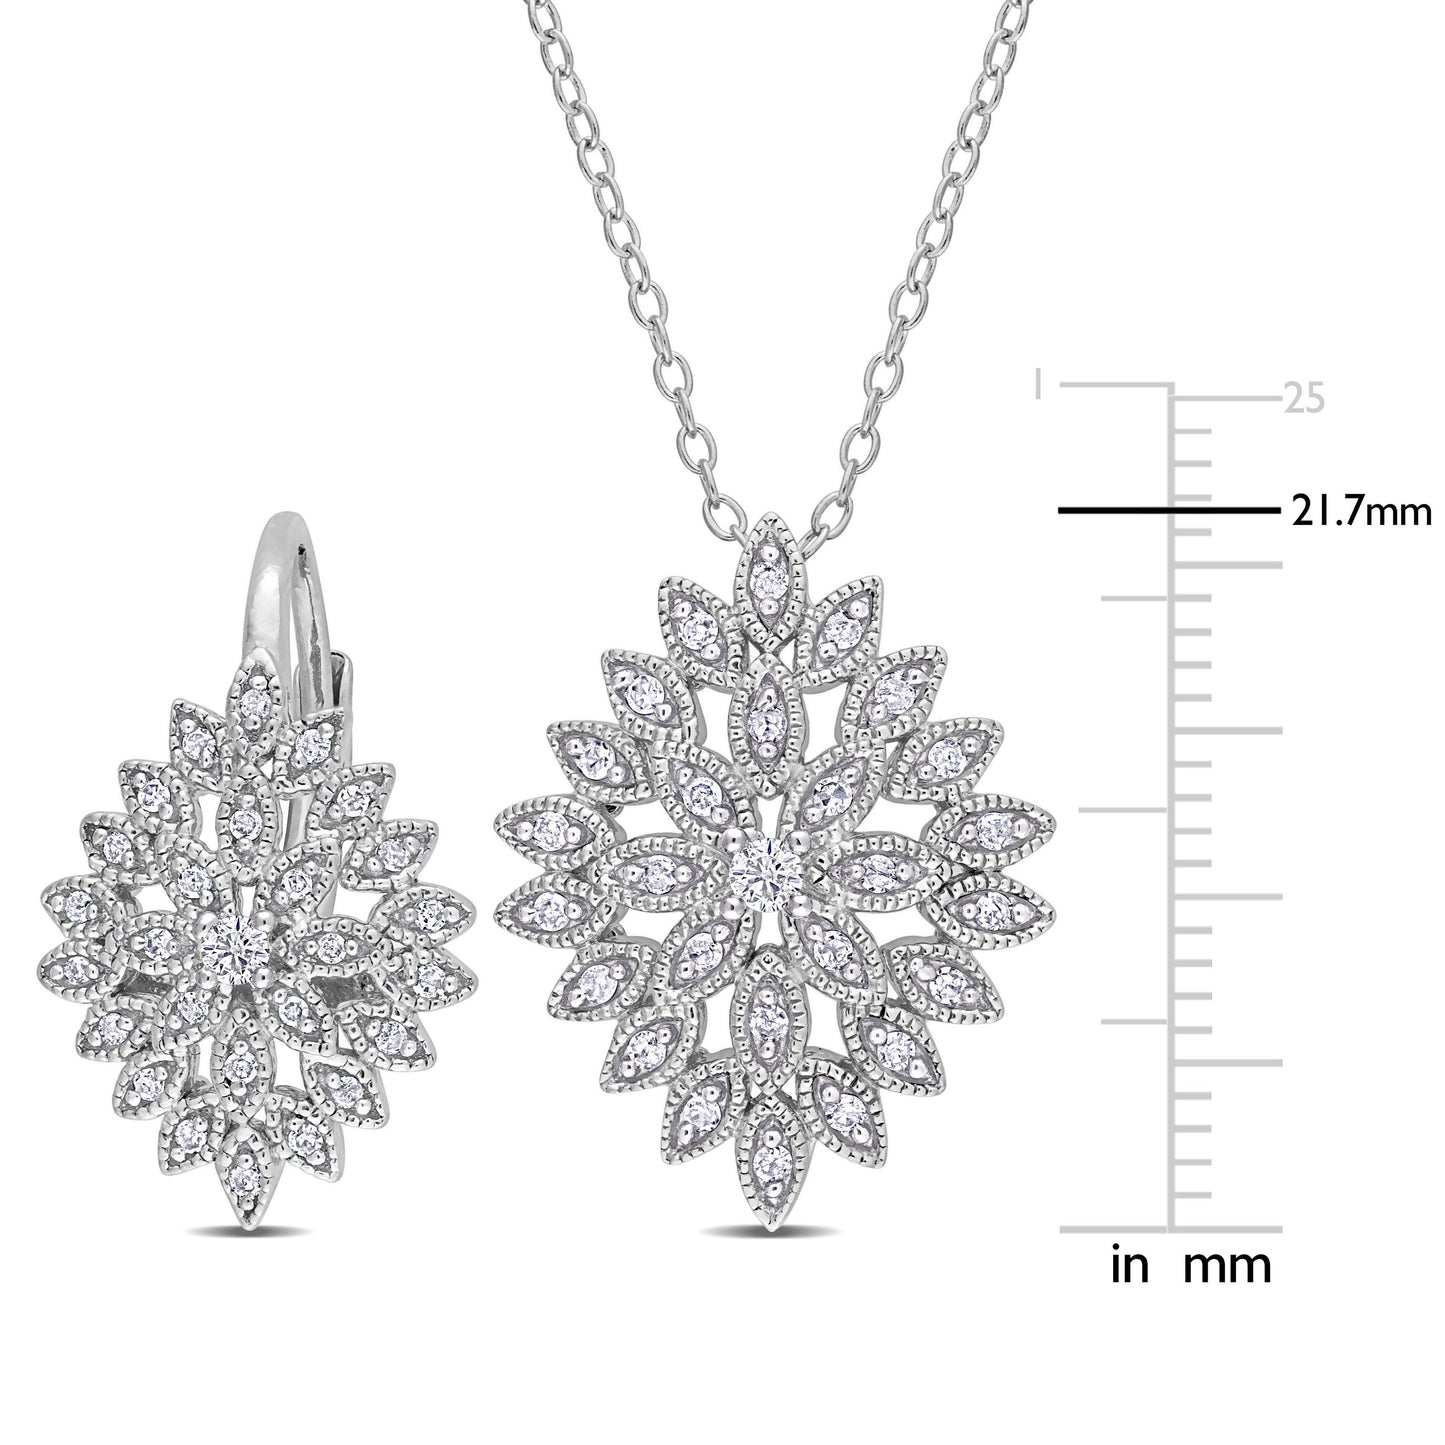 Diamond Cluster Necklace & Earrings Set in Sterling Silver